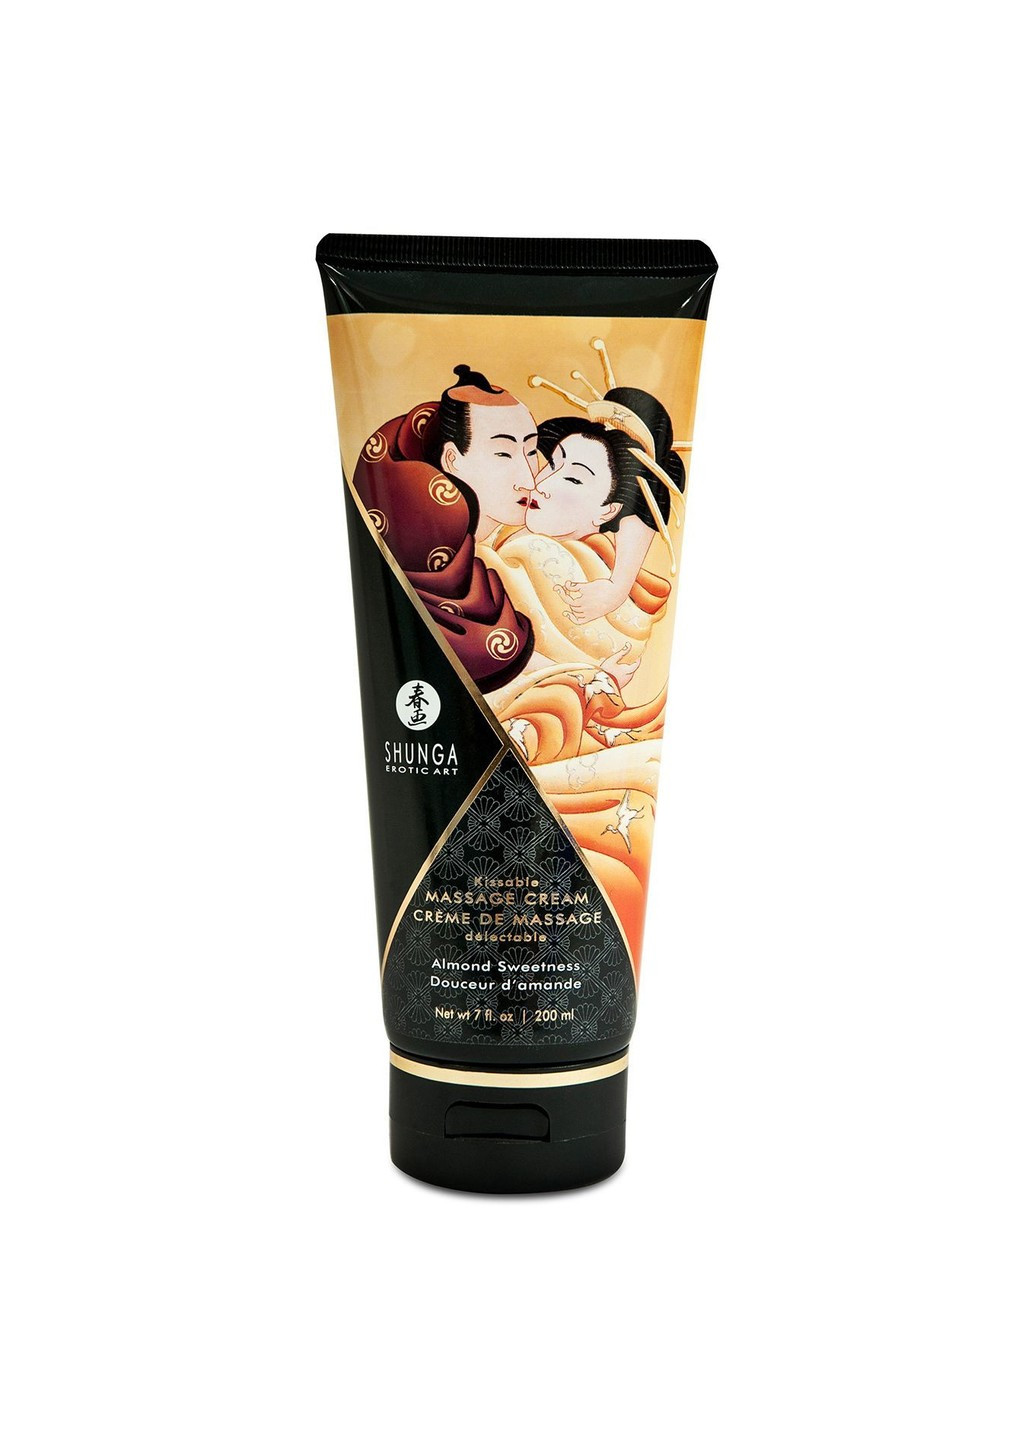 Съедобный массажный крем Kissable Massage Cream - Almond Sweetness (200 мл) Shunga (256031106)